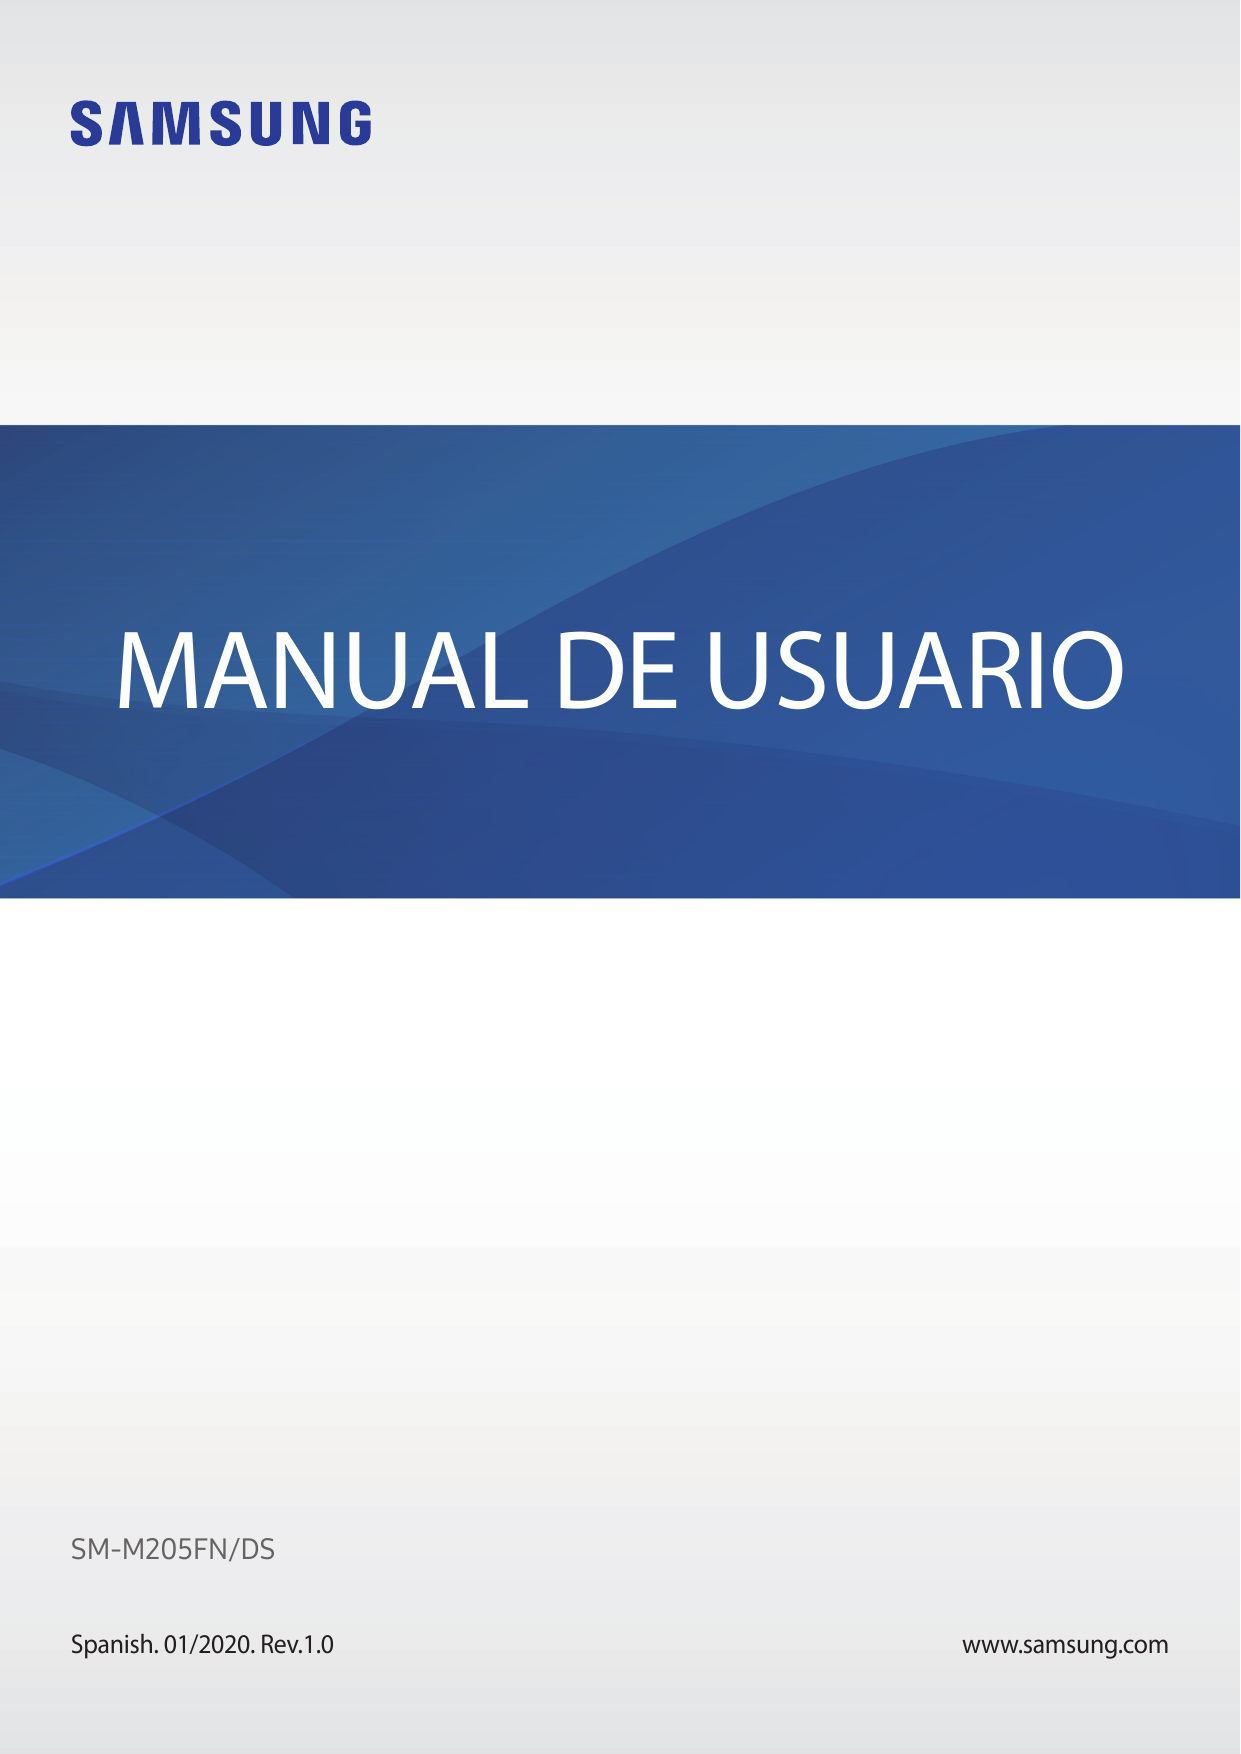 MANUAL DE USUARIOSM-M205FN/DSSpanish. 01/2020. Rev.1.0www.samsung.com